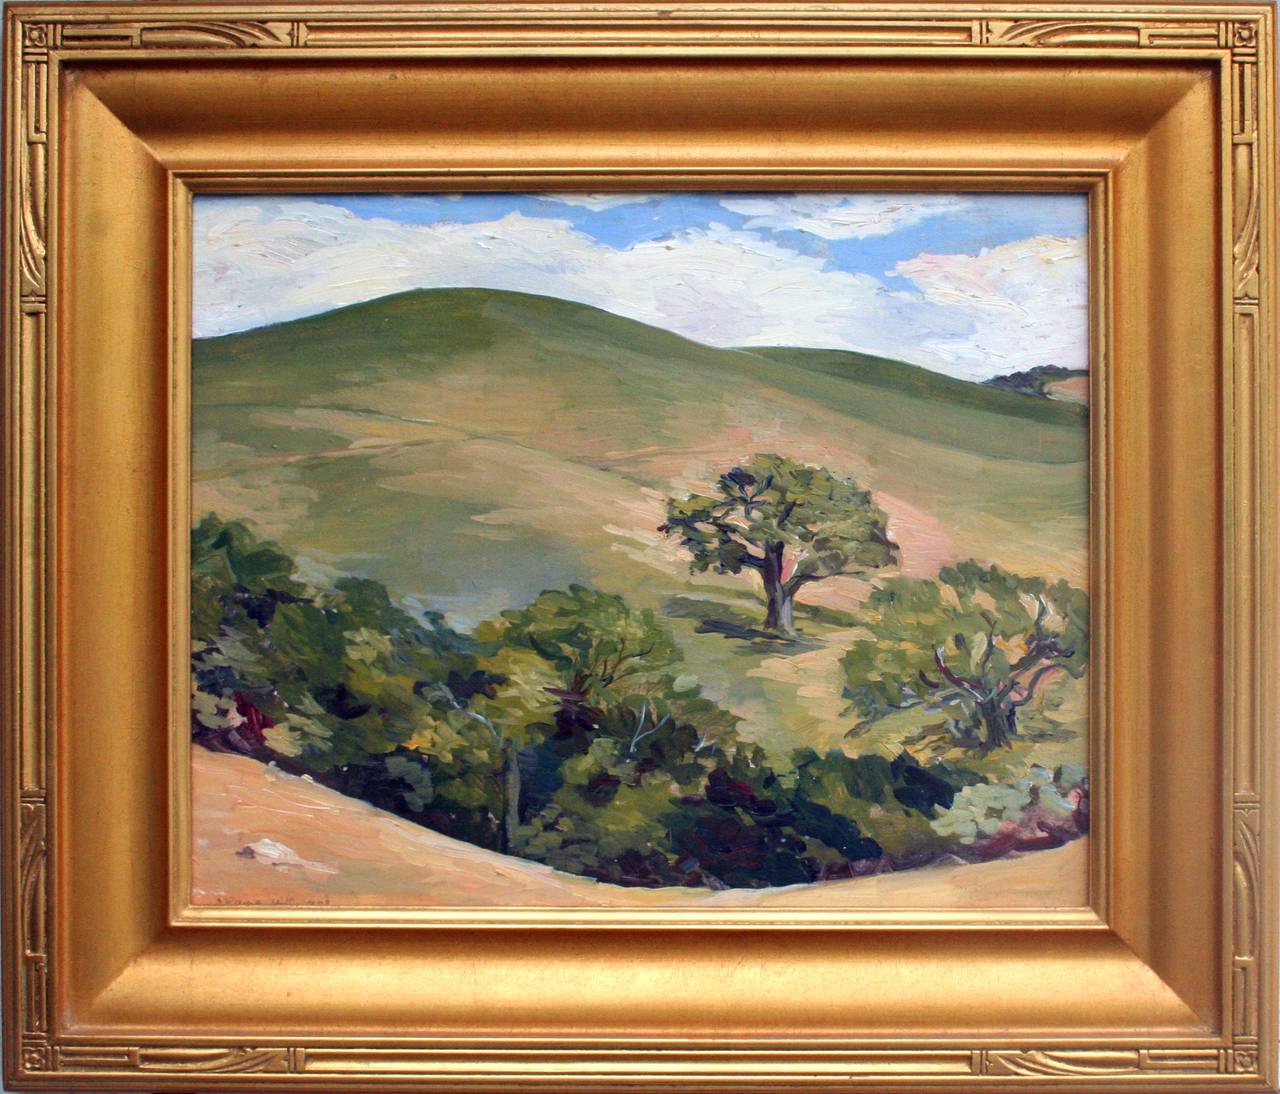 Mireille Piazzoni Wood Landscape Painting - "Ranch Hills", Carmel Valley California Landscape